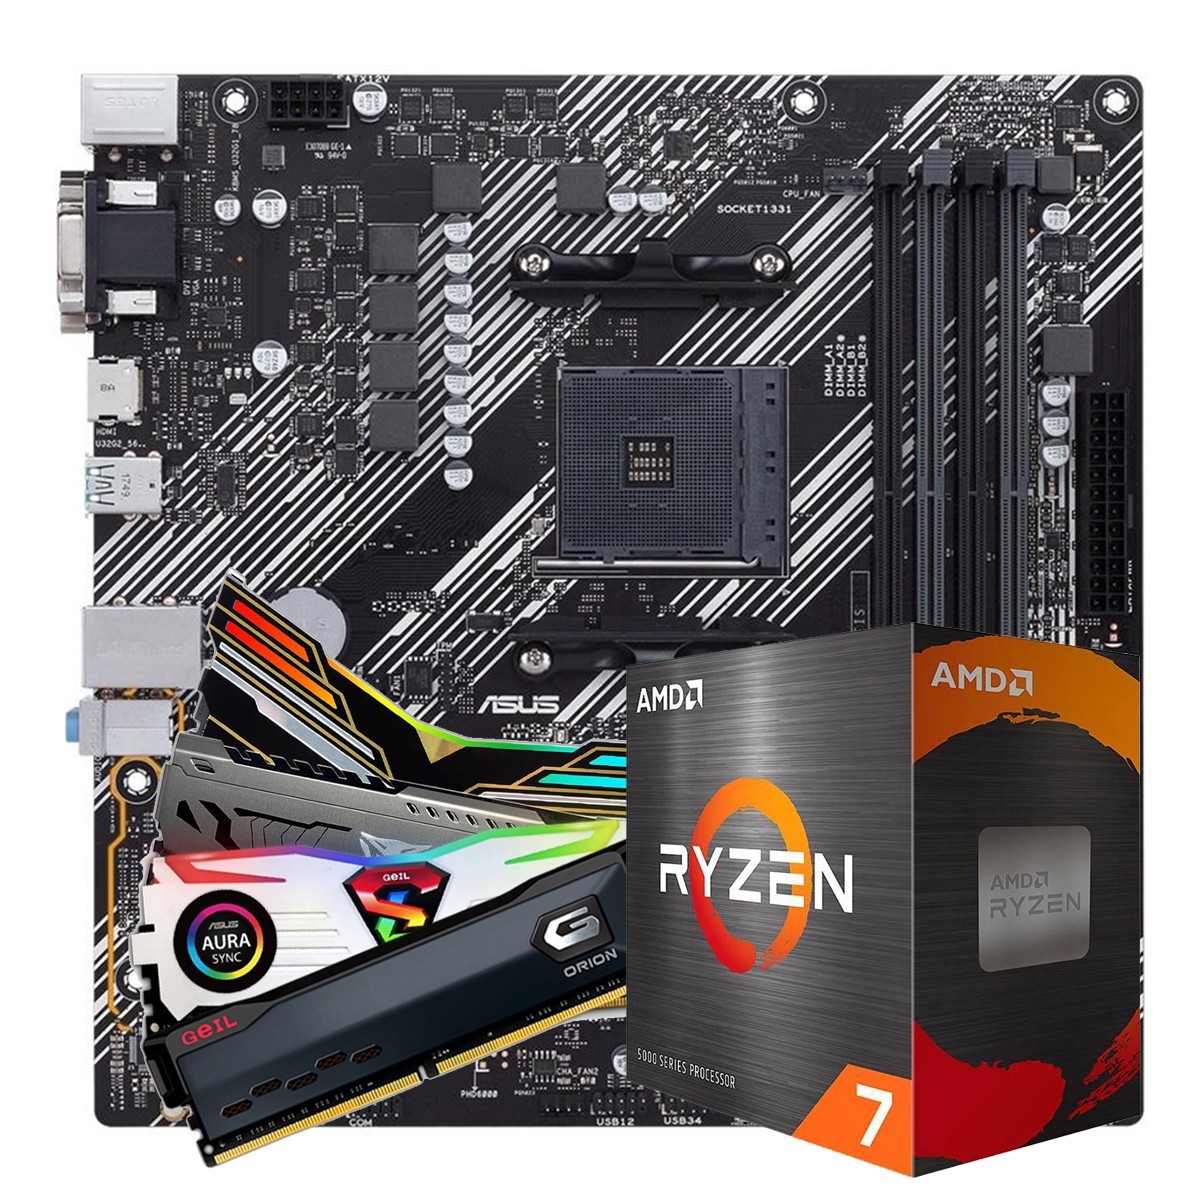 Kit Upgrade, AMD Ryzen 7 5700G, Placa Mãe Chipset B550, Memória DDR4 16GB